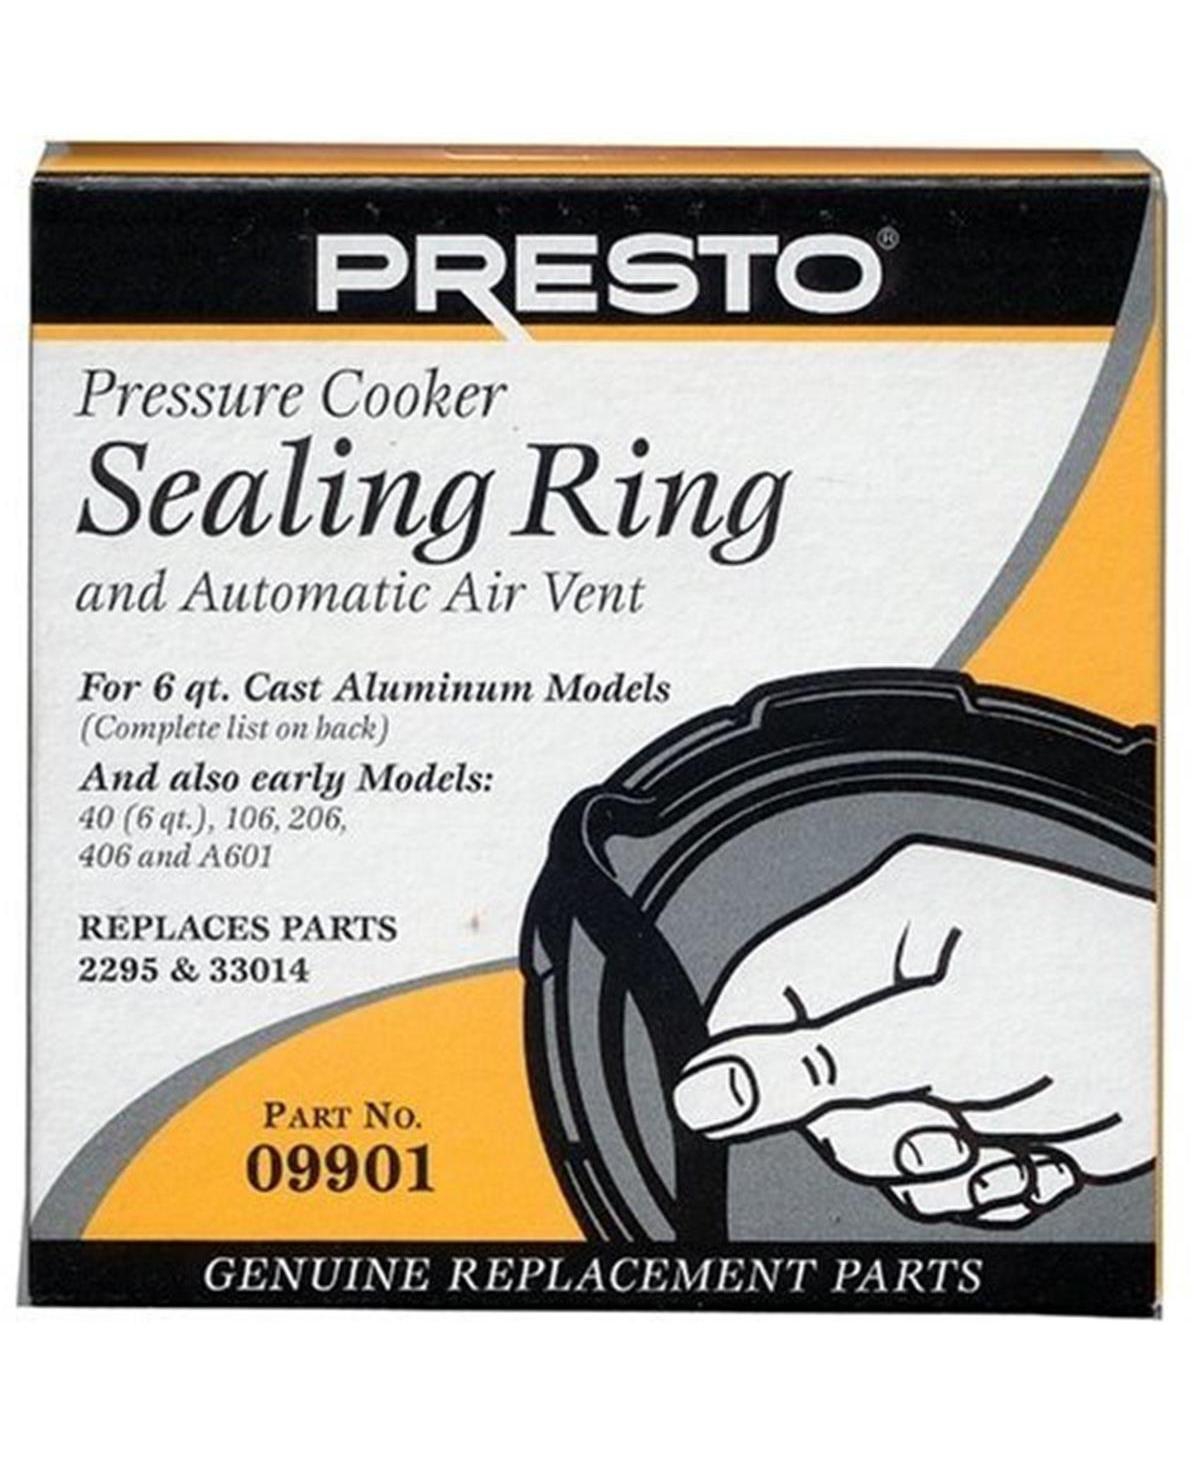 Presto 09901 Sealing Ring For 6 Qt. Aluminum Pressure Cooker In Black